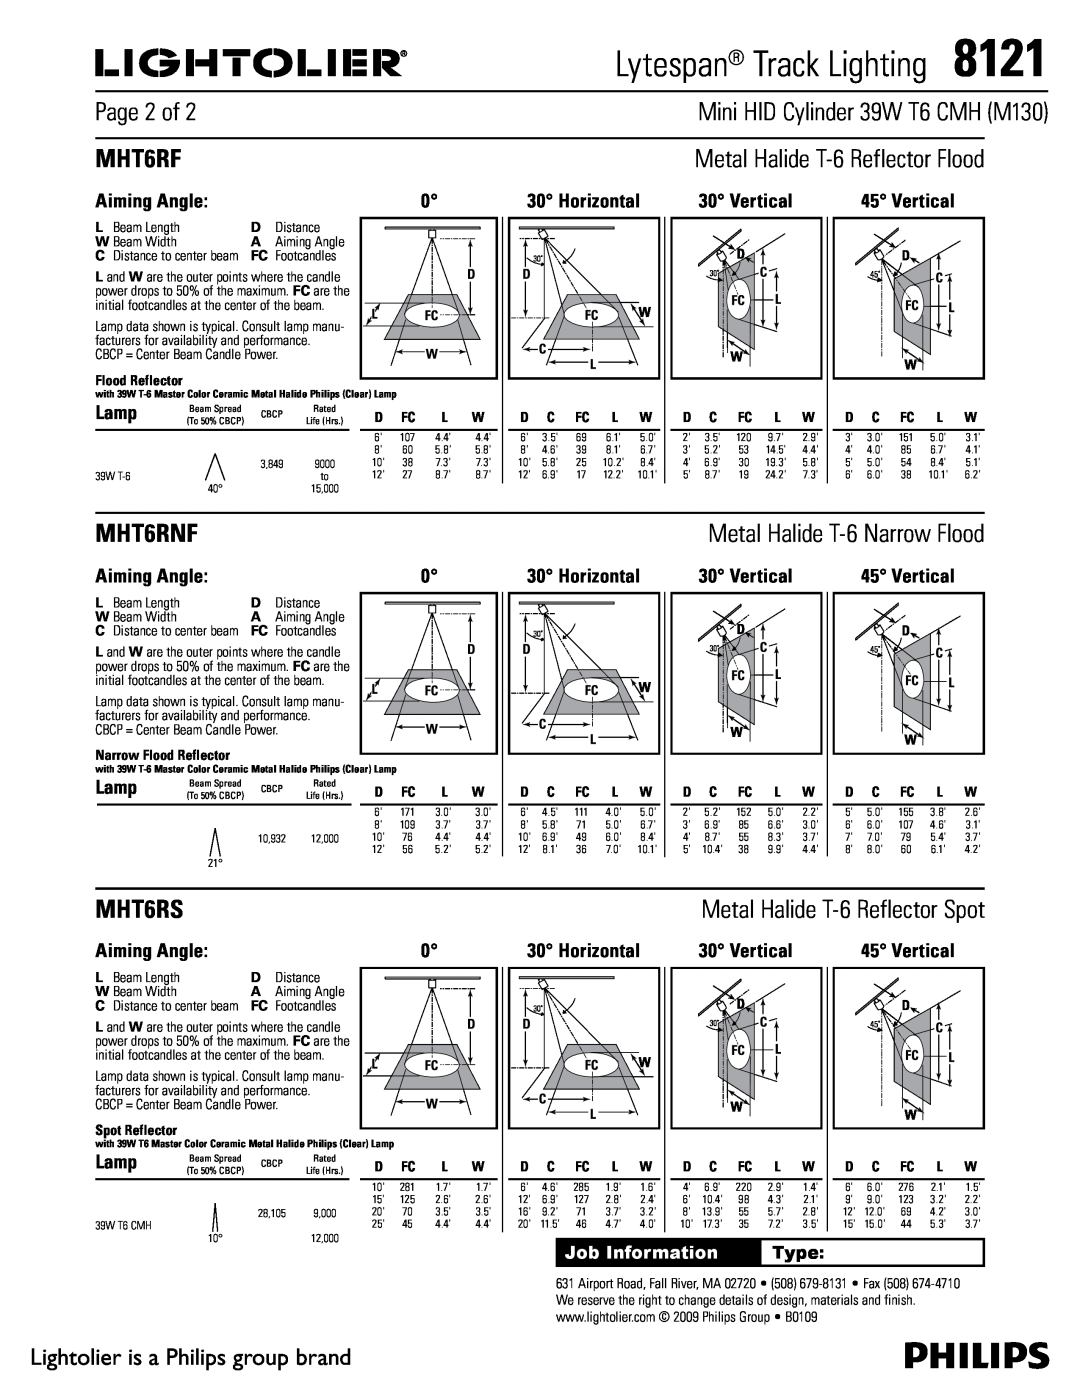 Lightolier manual MHT6RF, MHT6RNF, MHT6RS, Page 2 of, Lytespan Track Lighting8121, Mini HID Cylinder 39W T6 CMH M130 